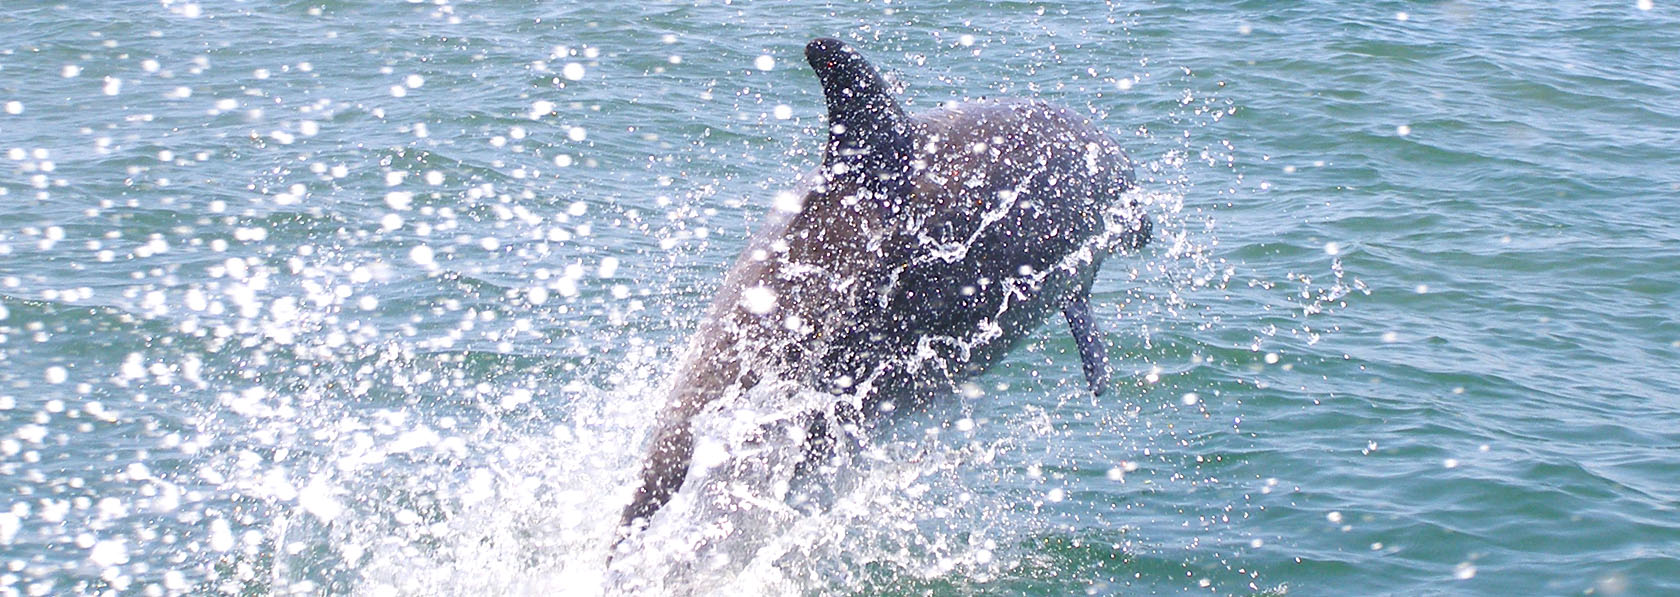 dauphin de l archipel des bijagos vu lors de ballade en bateau entre les réserves